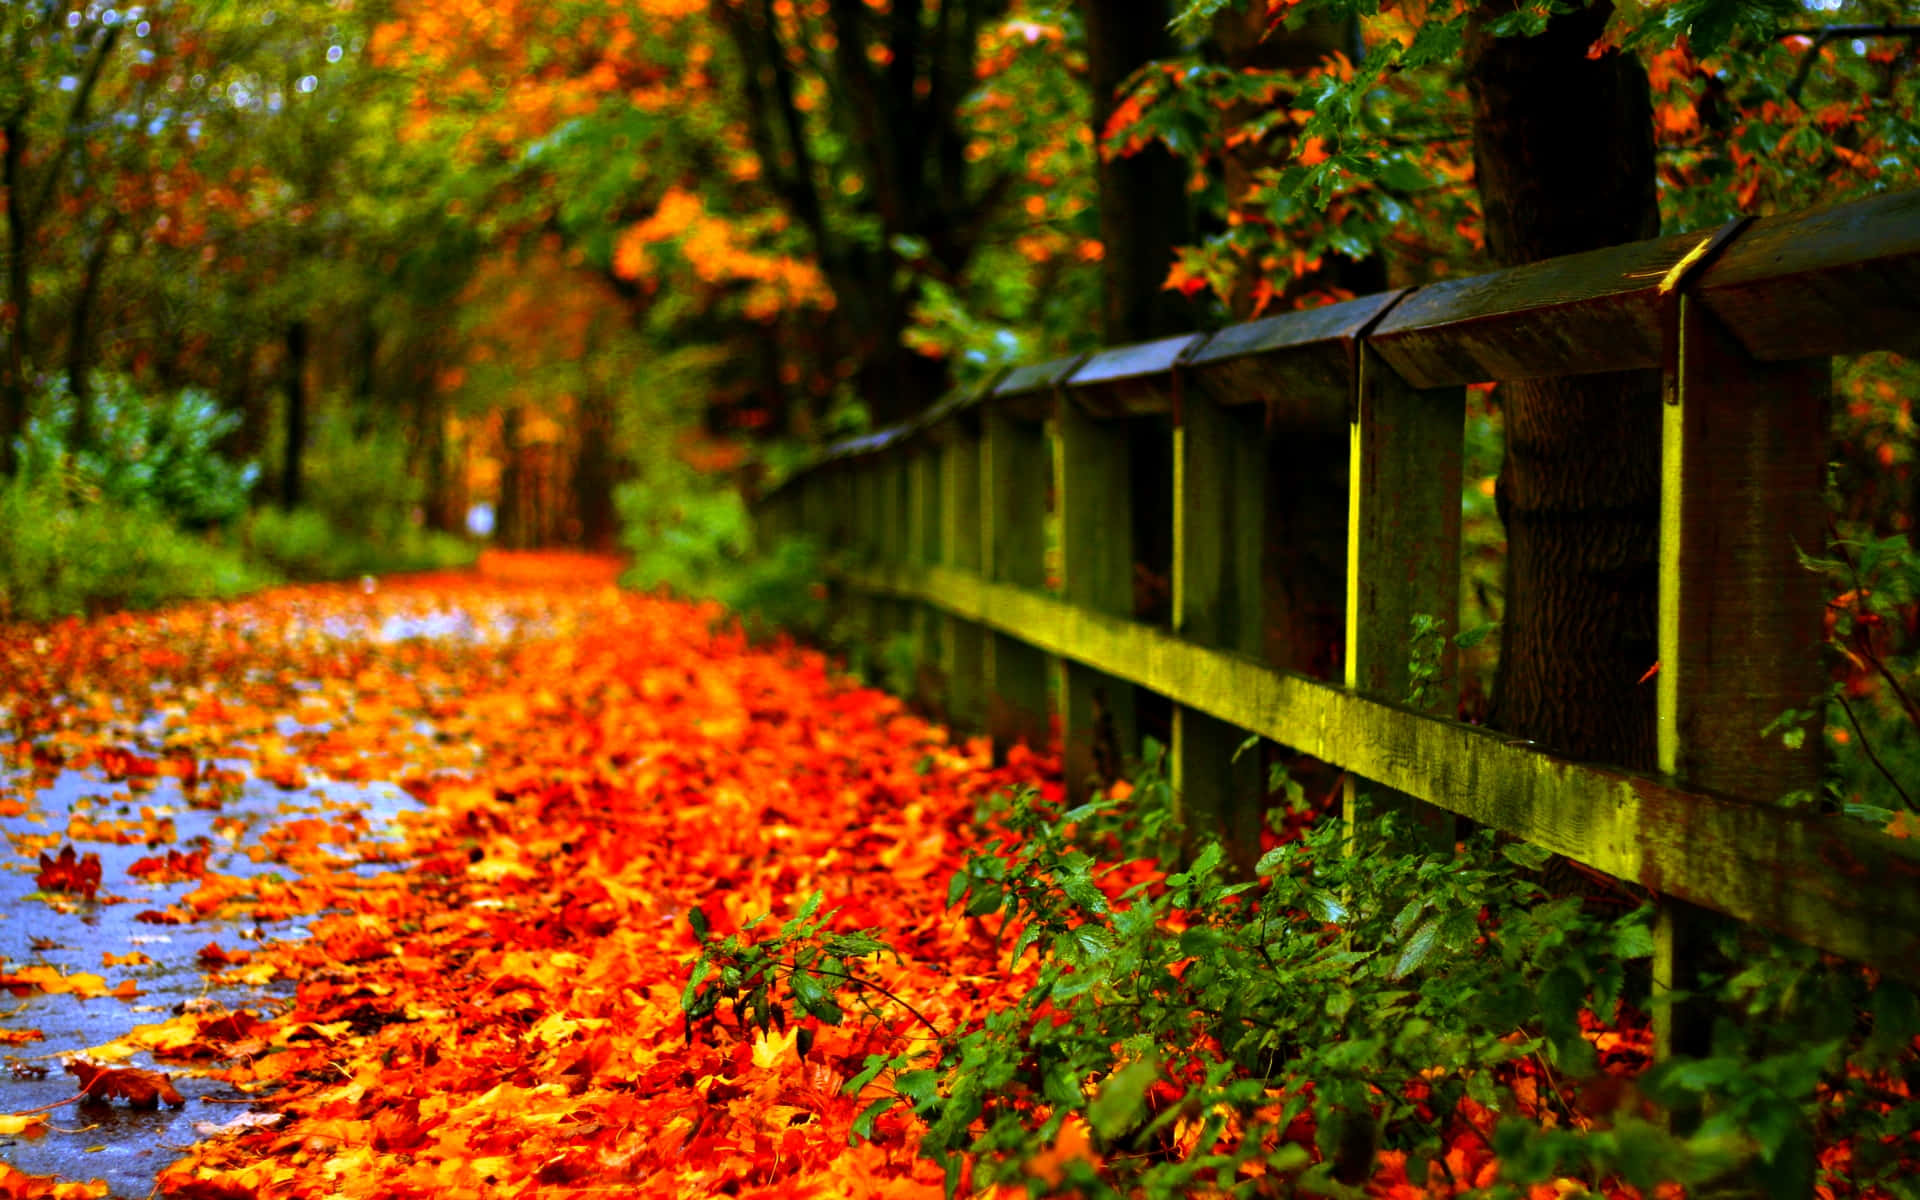 Enjoy the beauty of nature in this idyllic Fall Desktop scene.